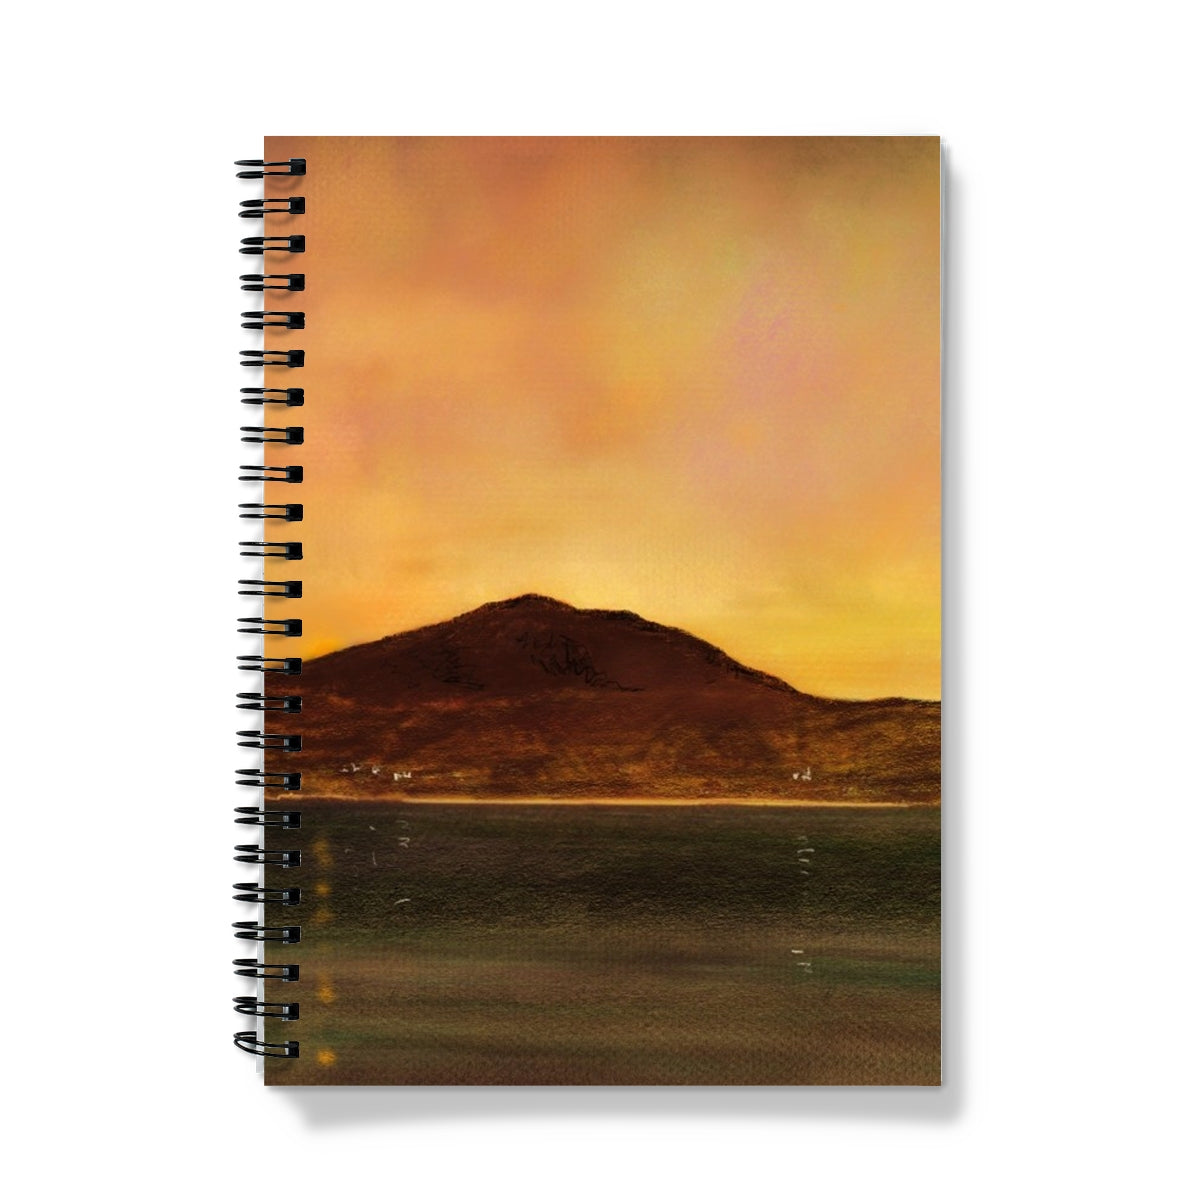 Eriskay Dusk Art Gifts Notebook-Journals & Notebooks-Hebridean Islands Art Gallery-A5-Lined-Paintings, Prints, Homeware, Art Gifts From Scotland By Scottish Artist Kevin Hunter